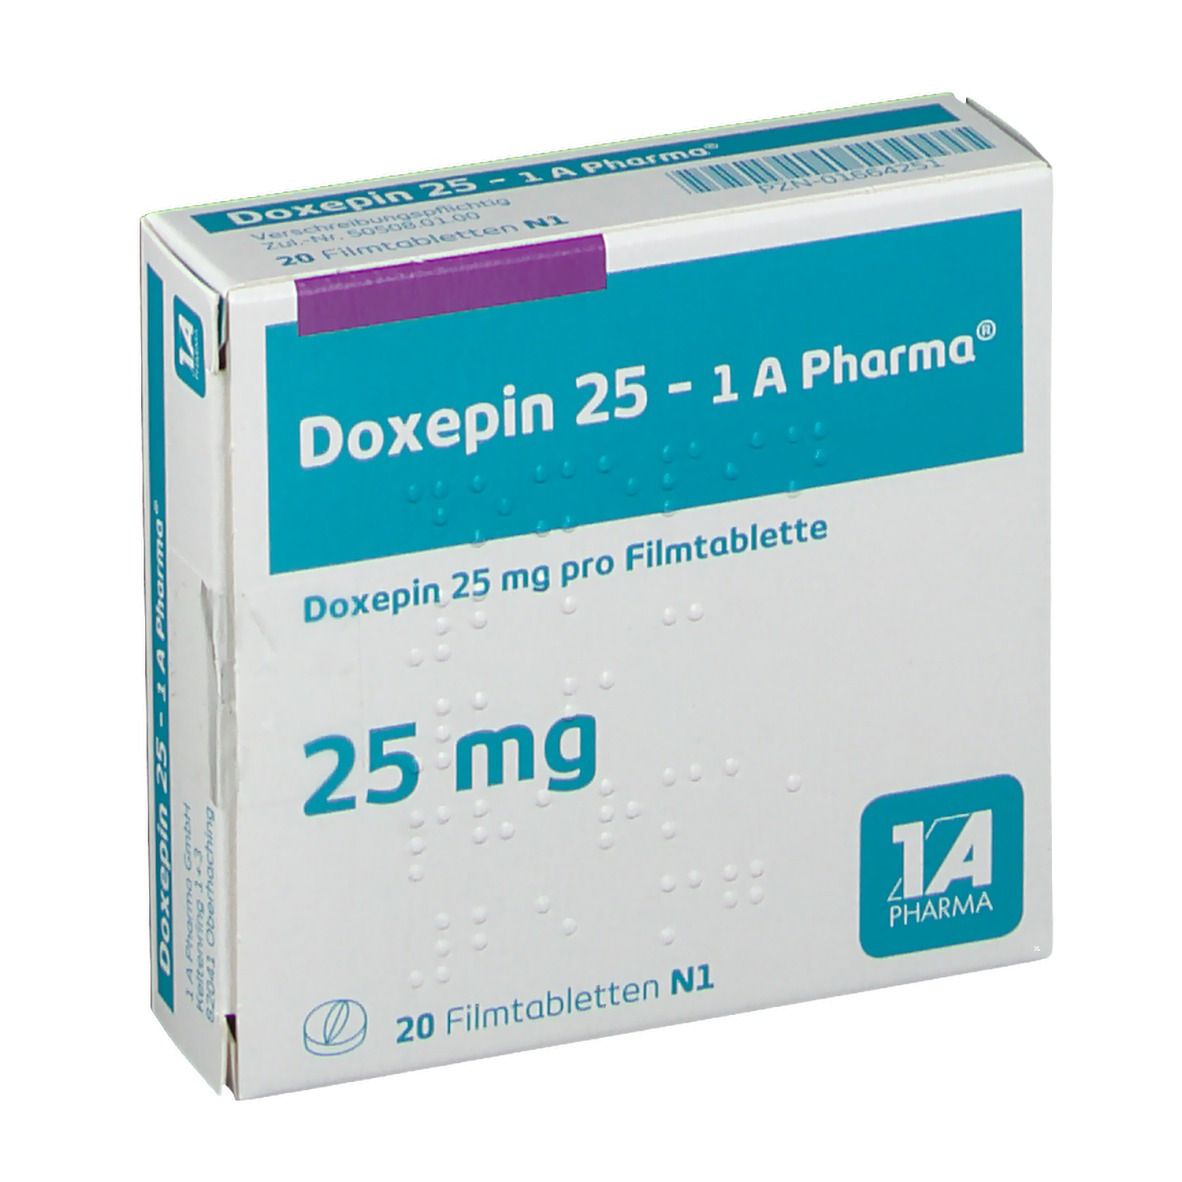 Doxepin 25 - 1 A Pharma®